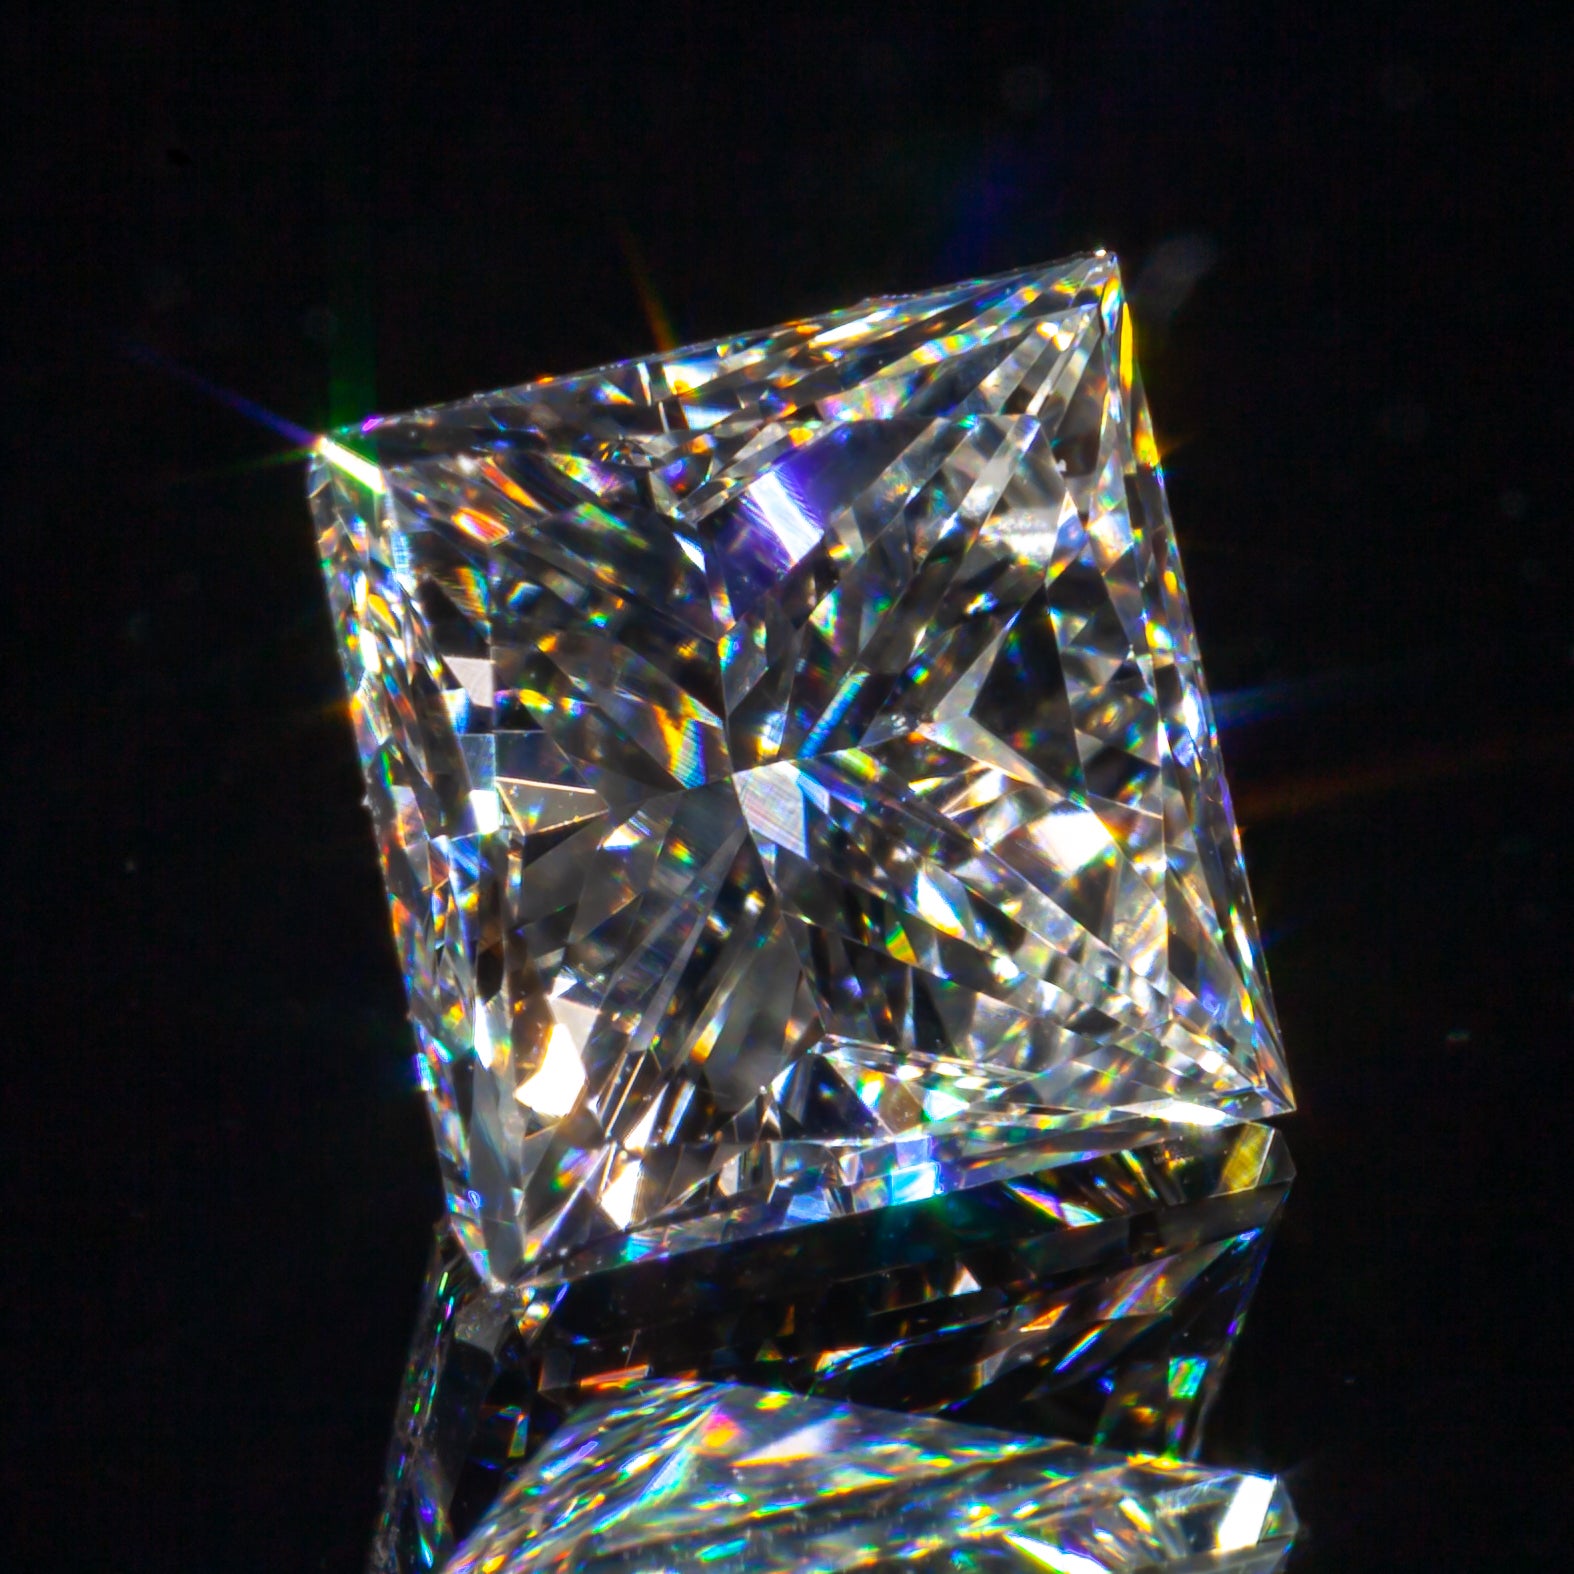 1.13 Carat Loose I / VS2 Princess Cut Diamond GIA Certified

Diamond General Info
GIA Report Number: 6183448166
Diamond Cut: Square Modified Brilliant
Measurements: 5.61 x 5.60 x 4.09 mm

Diamond Grading Results
Carat Weight: 1.13
Color Grade: